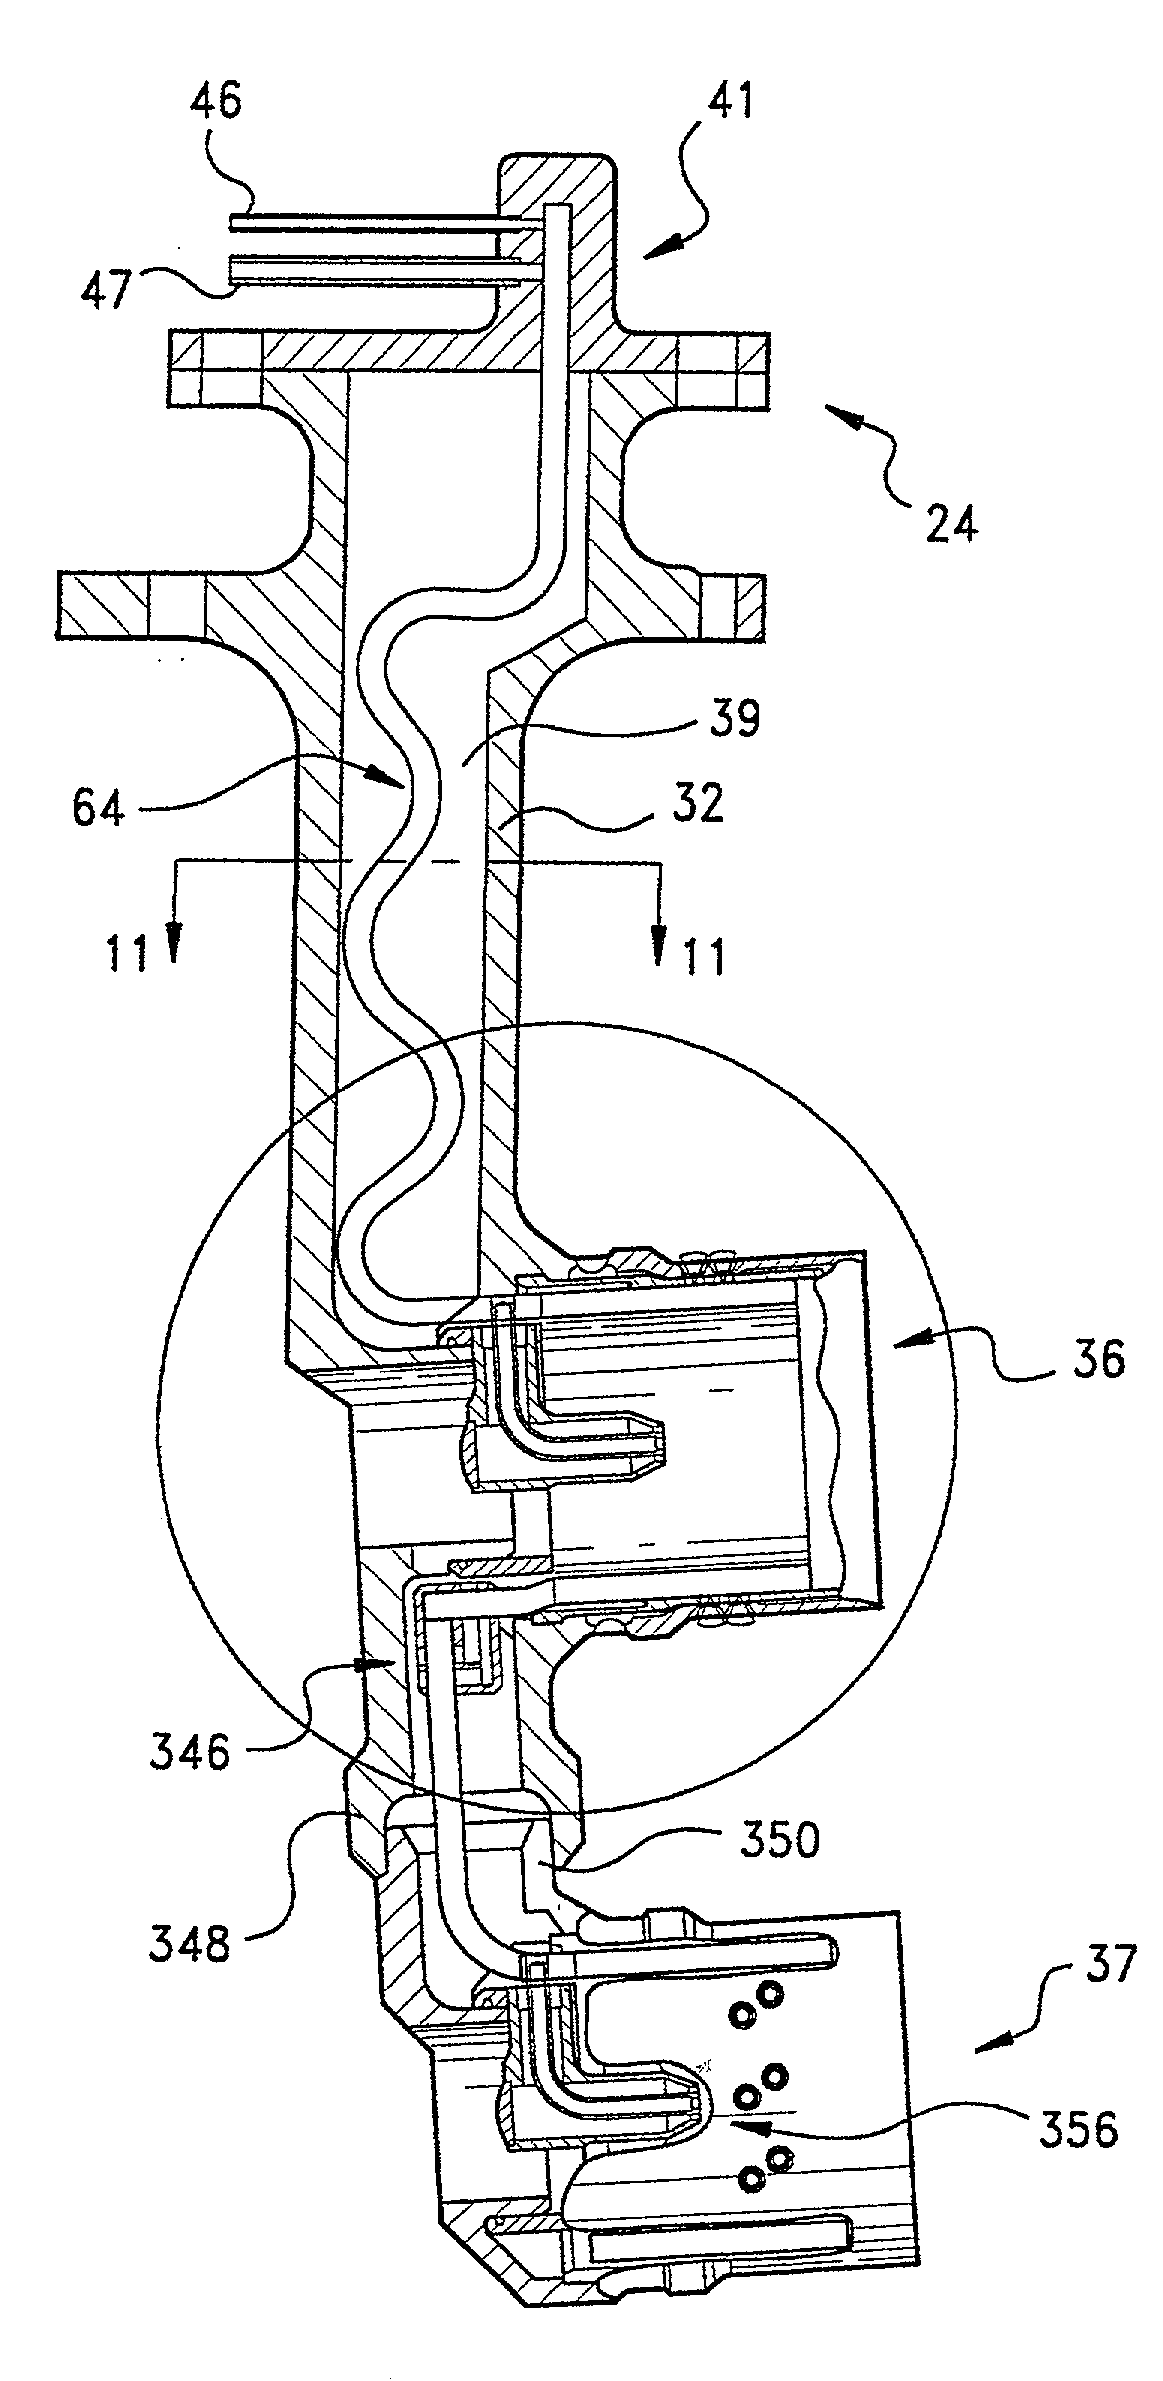 Multi-circuit, multi-injection point atomizer